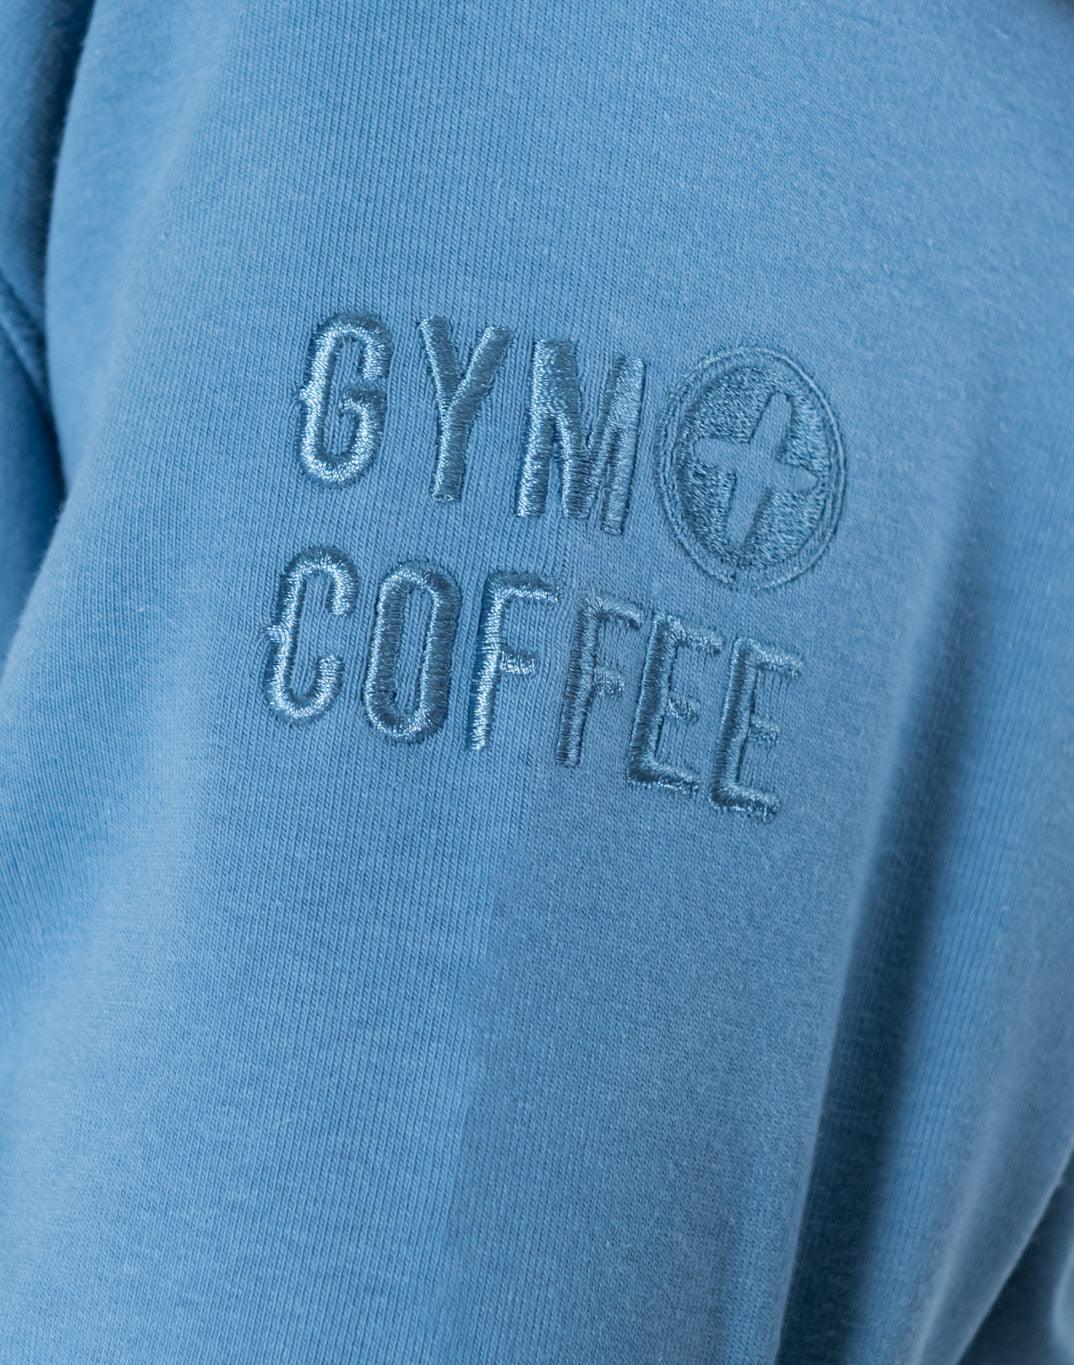 Essential Chill Half Zip in Astral Blue - Sweatshirts - Gym+Coffee IE